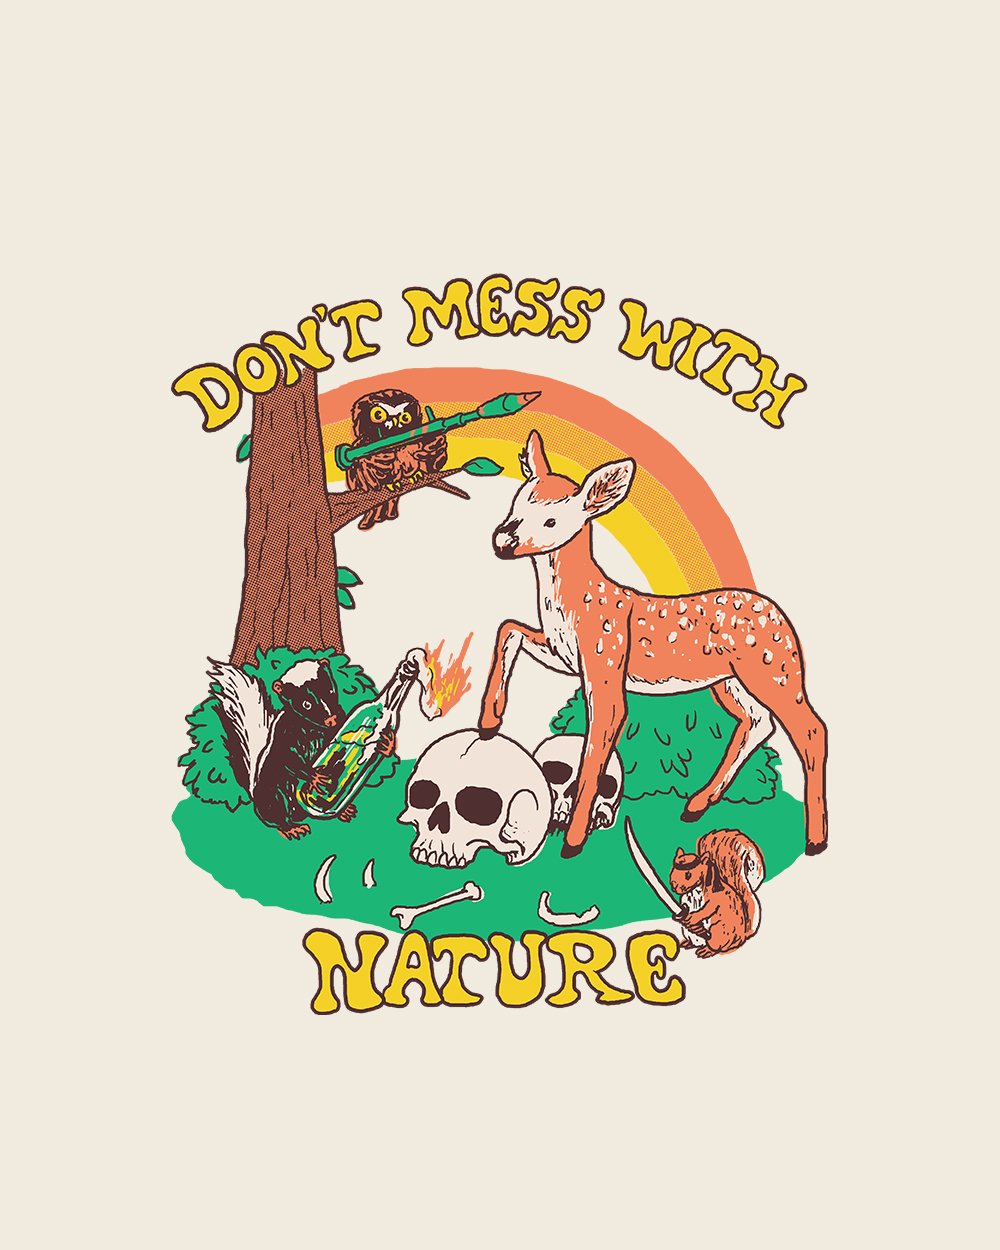 Don't Mess with Nature T-Shirt Australia Online #colour_natural